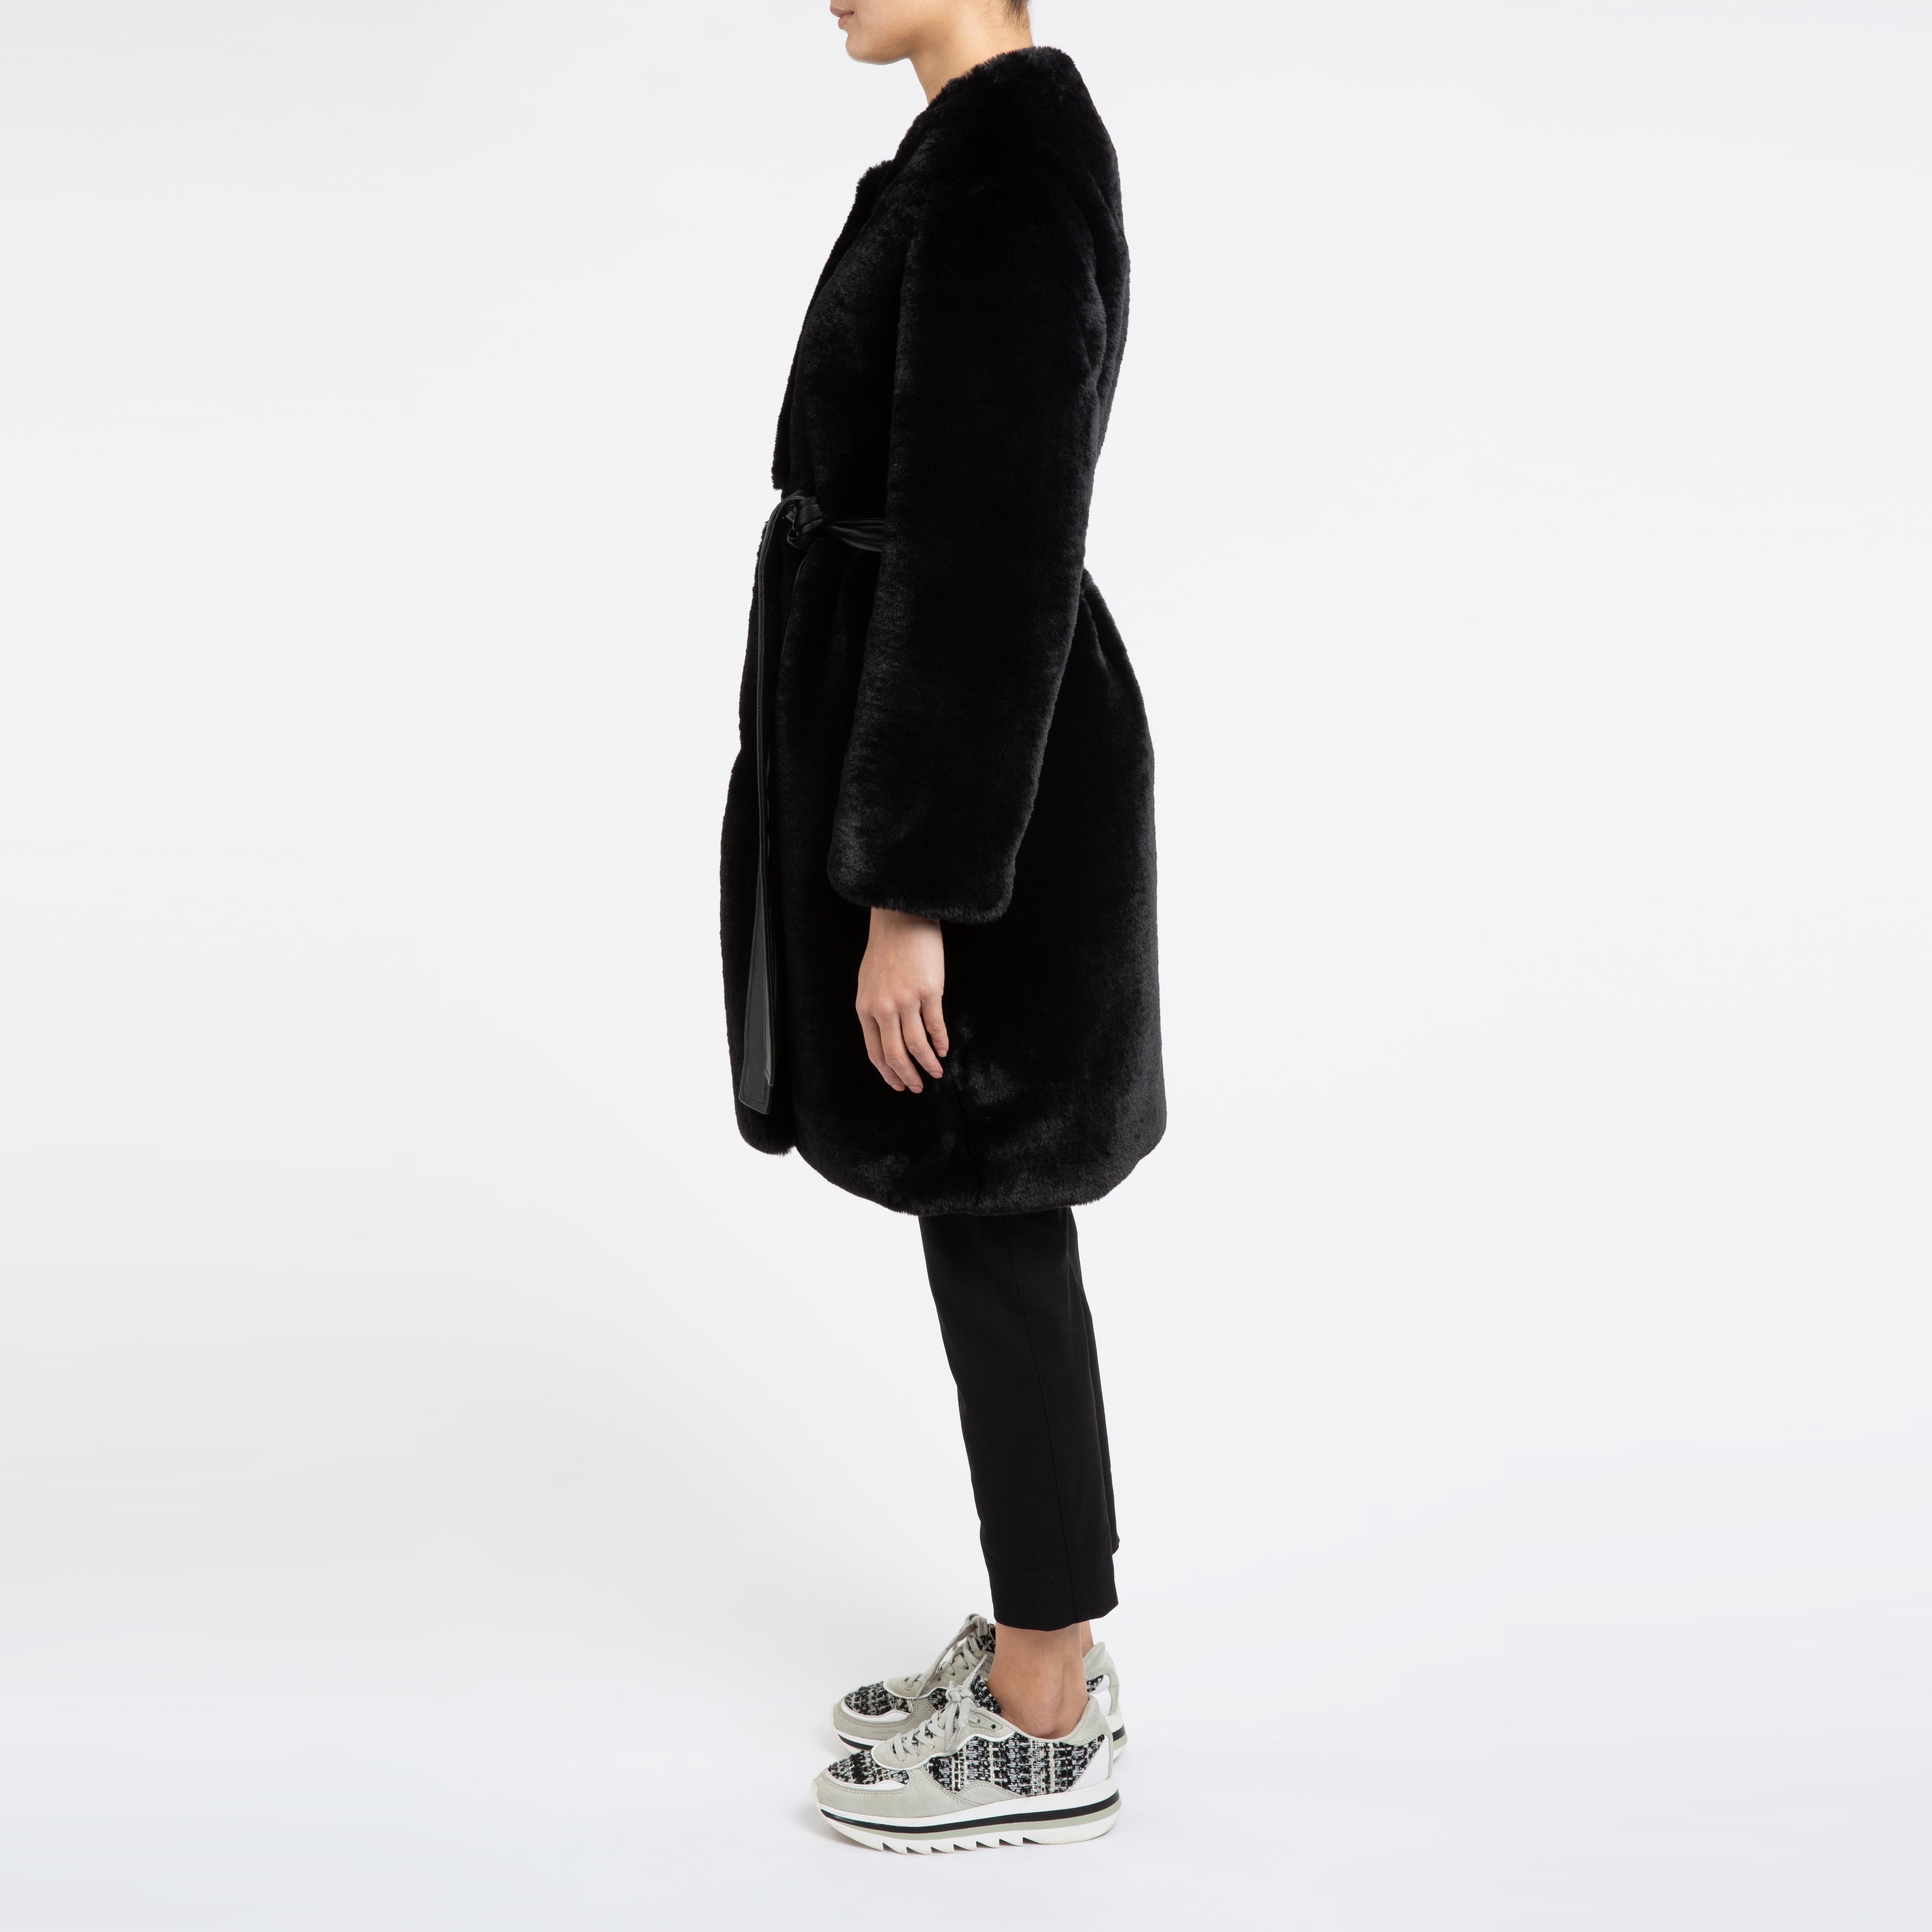 Verheyen London Serena  Collarless Faux Fur Coat in Black - Size uk 10 2